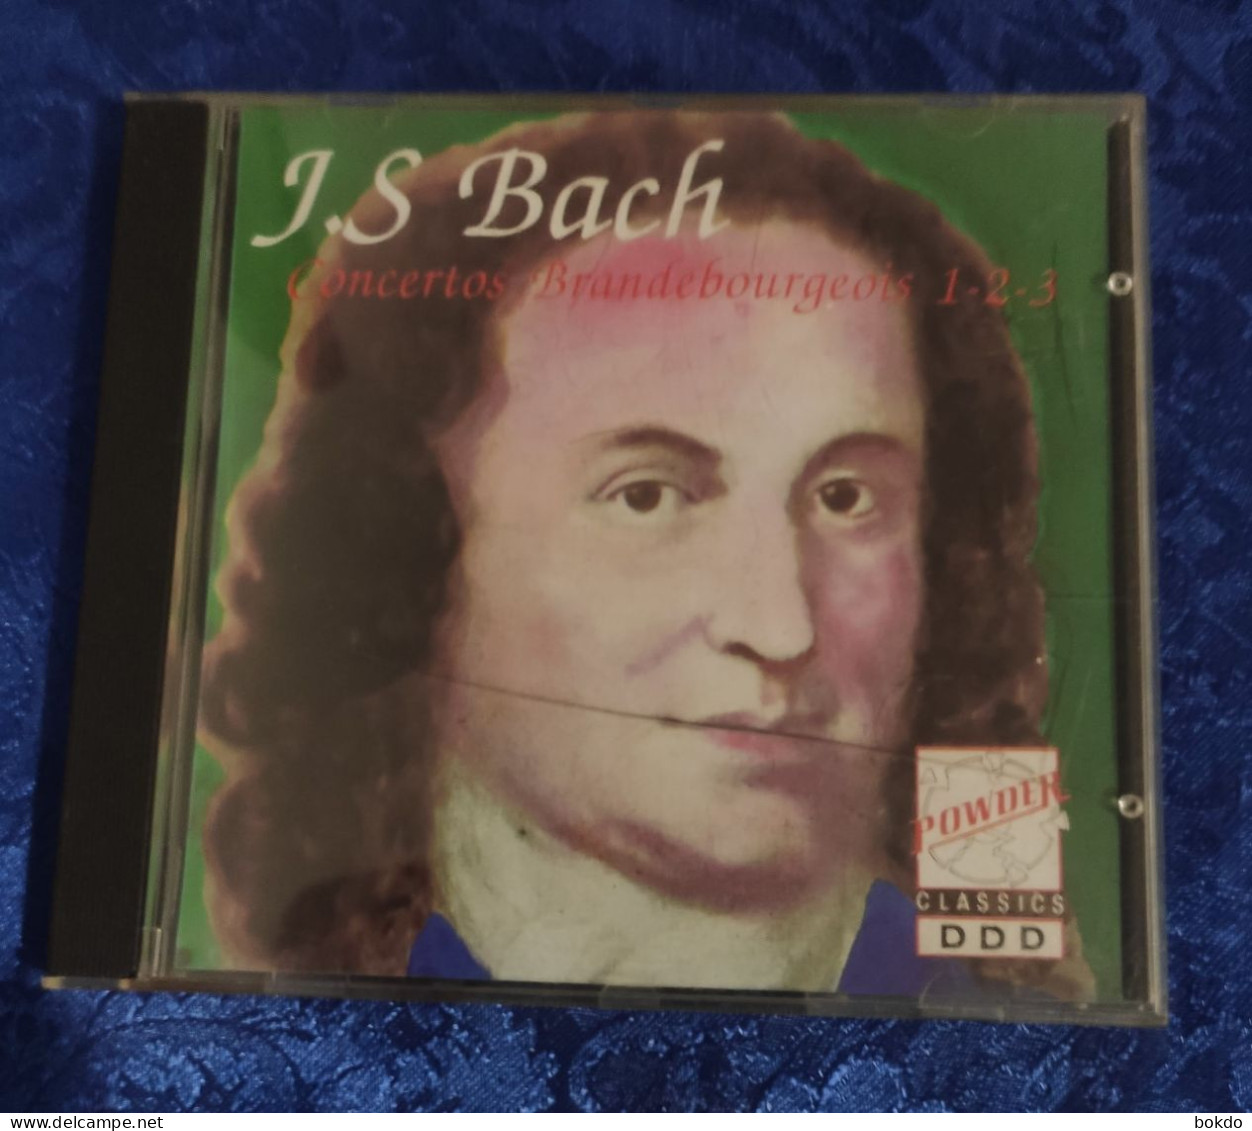 J.S. BACH - Concertos - Clásica